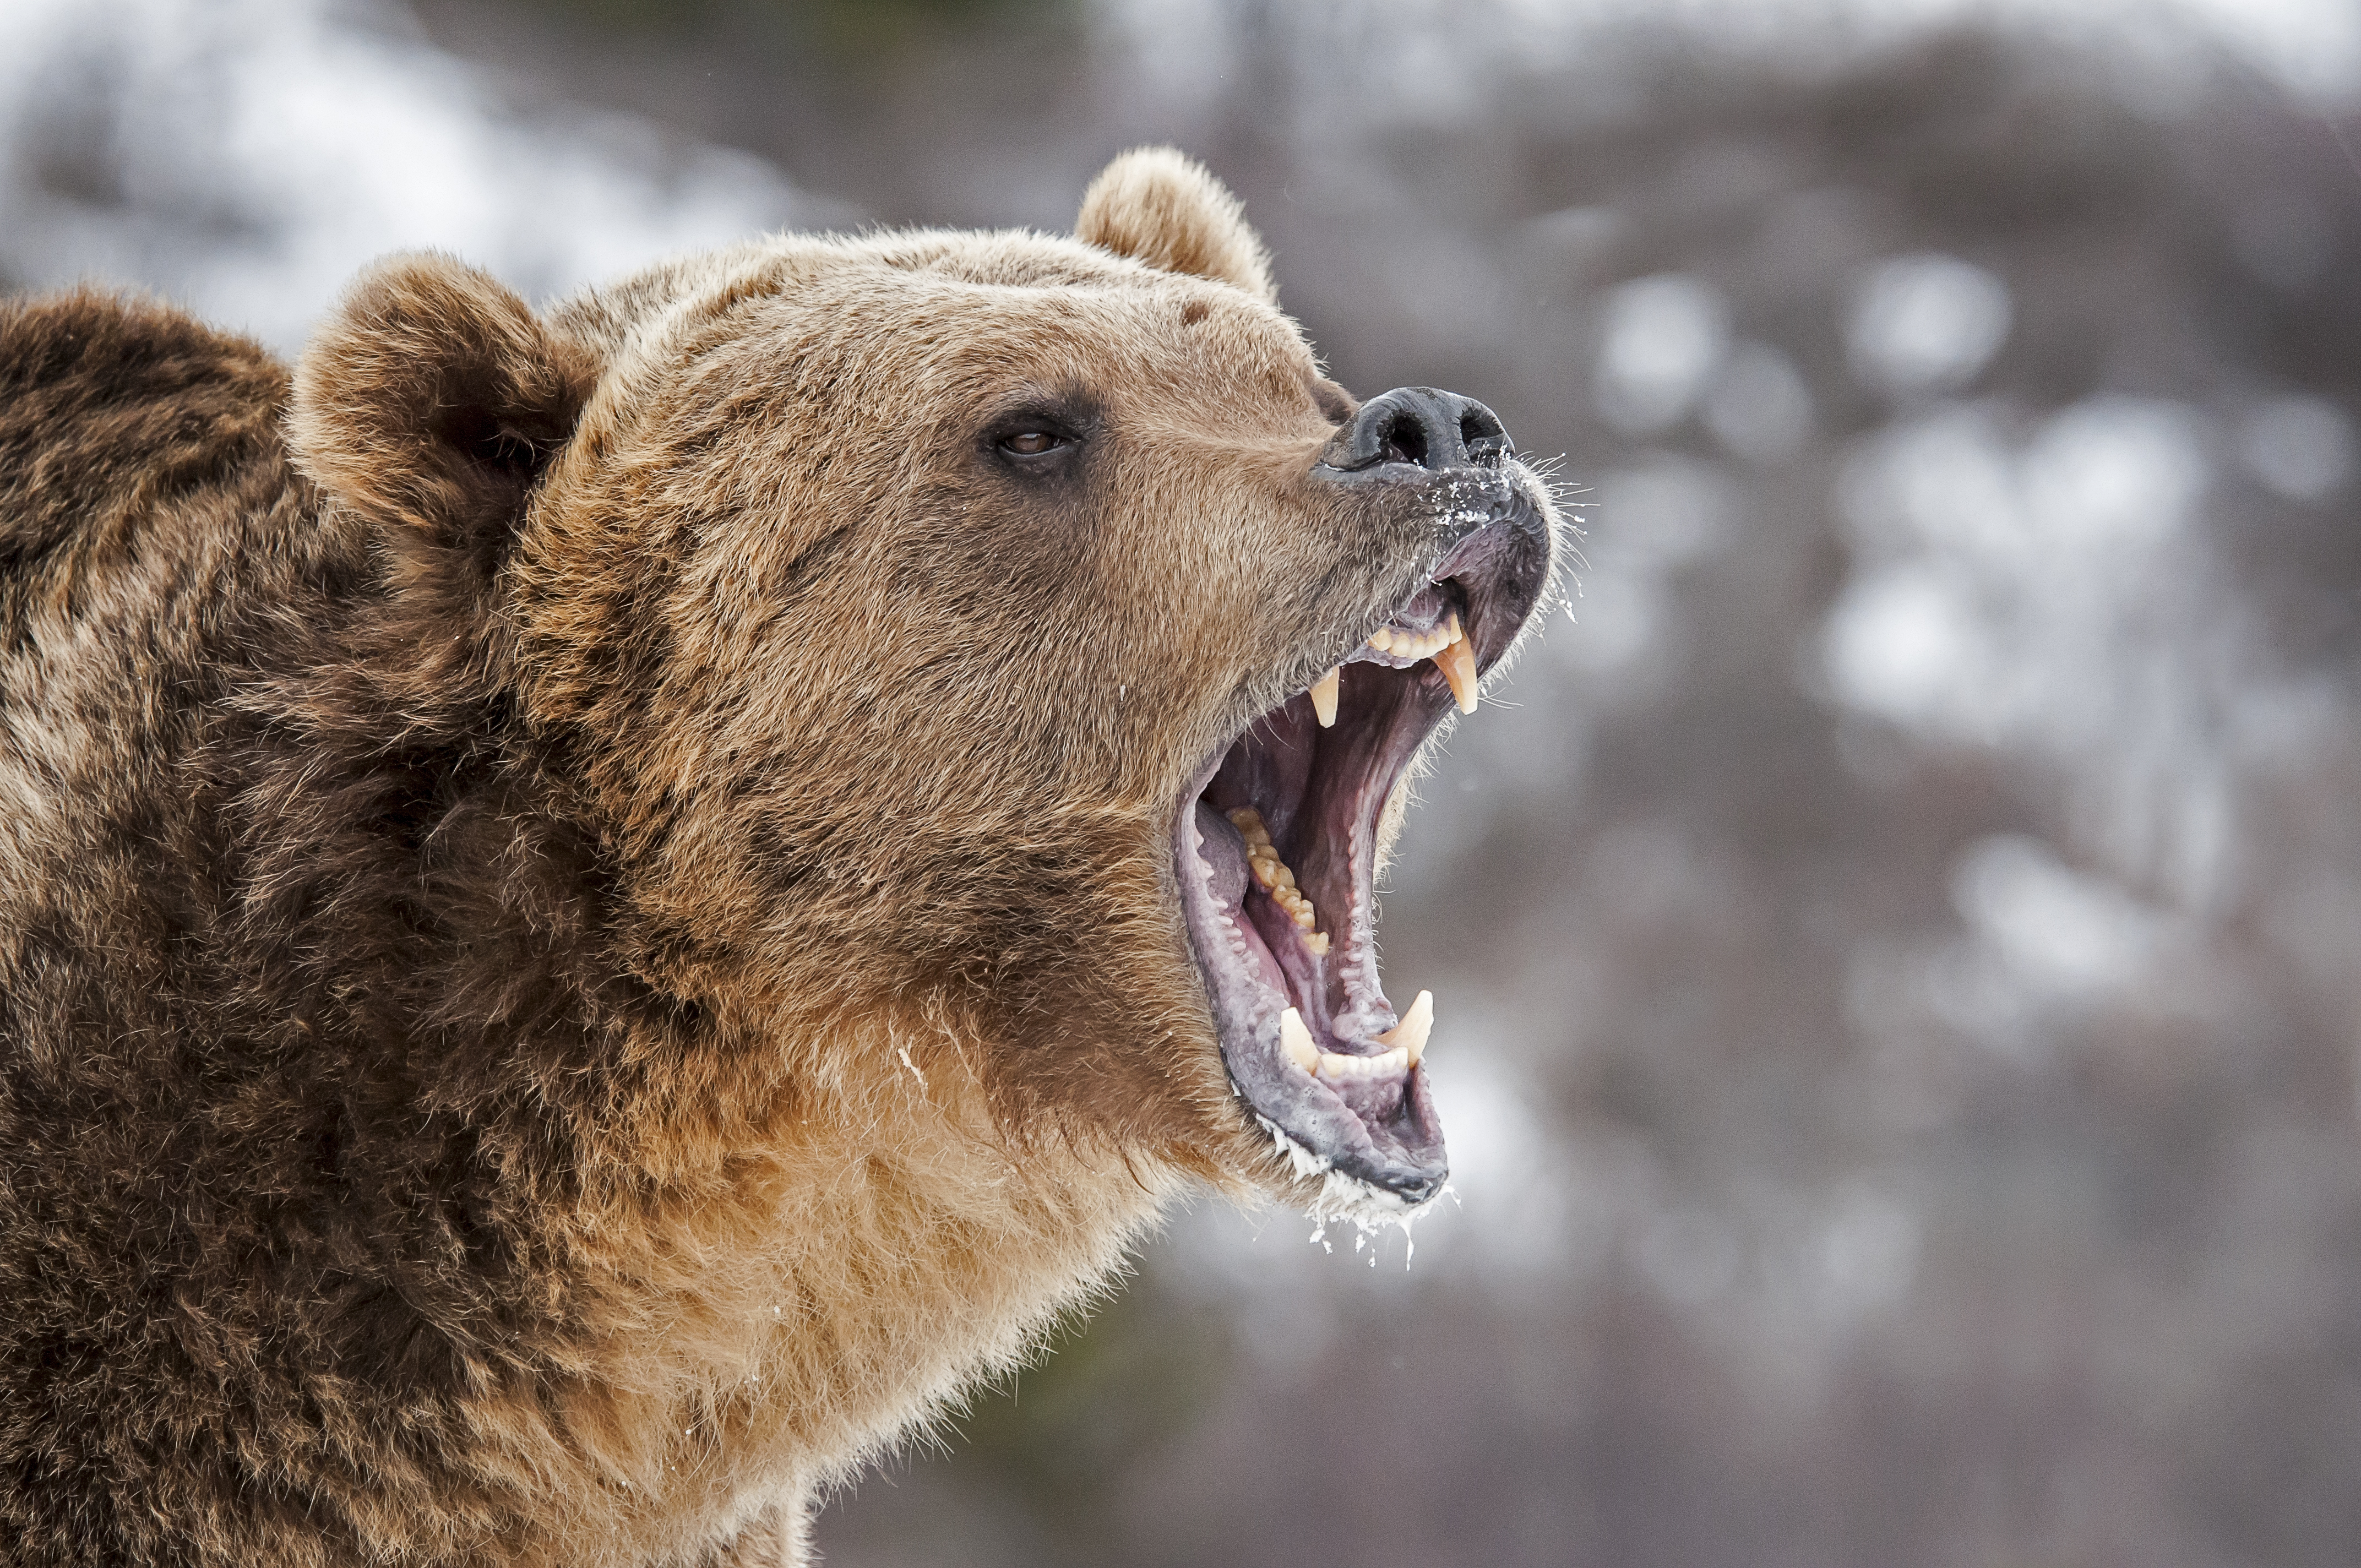 Close-up of a bear, bear encounters concept. 